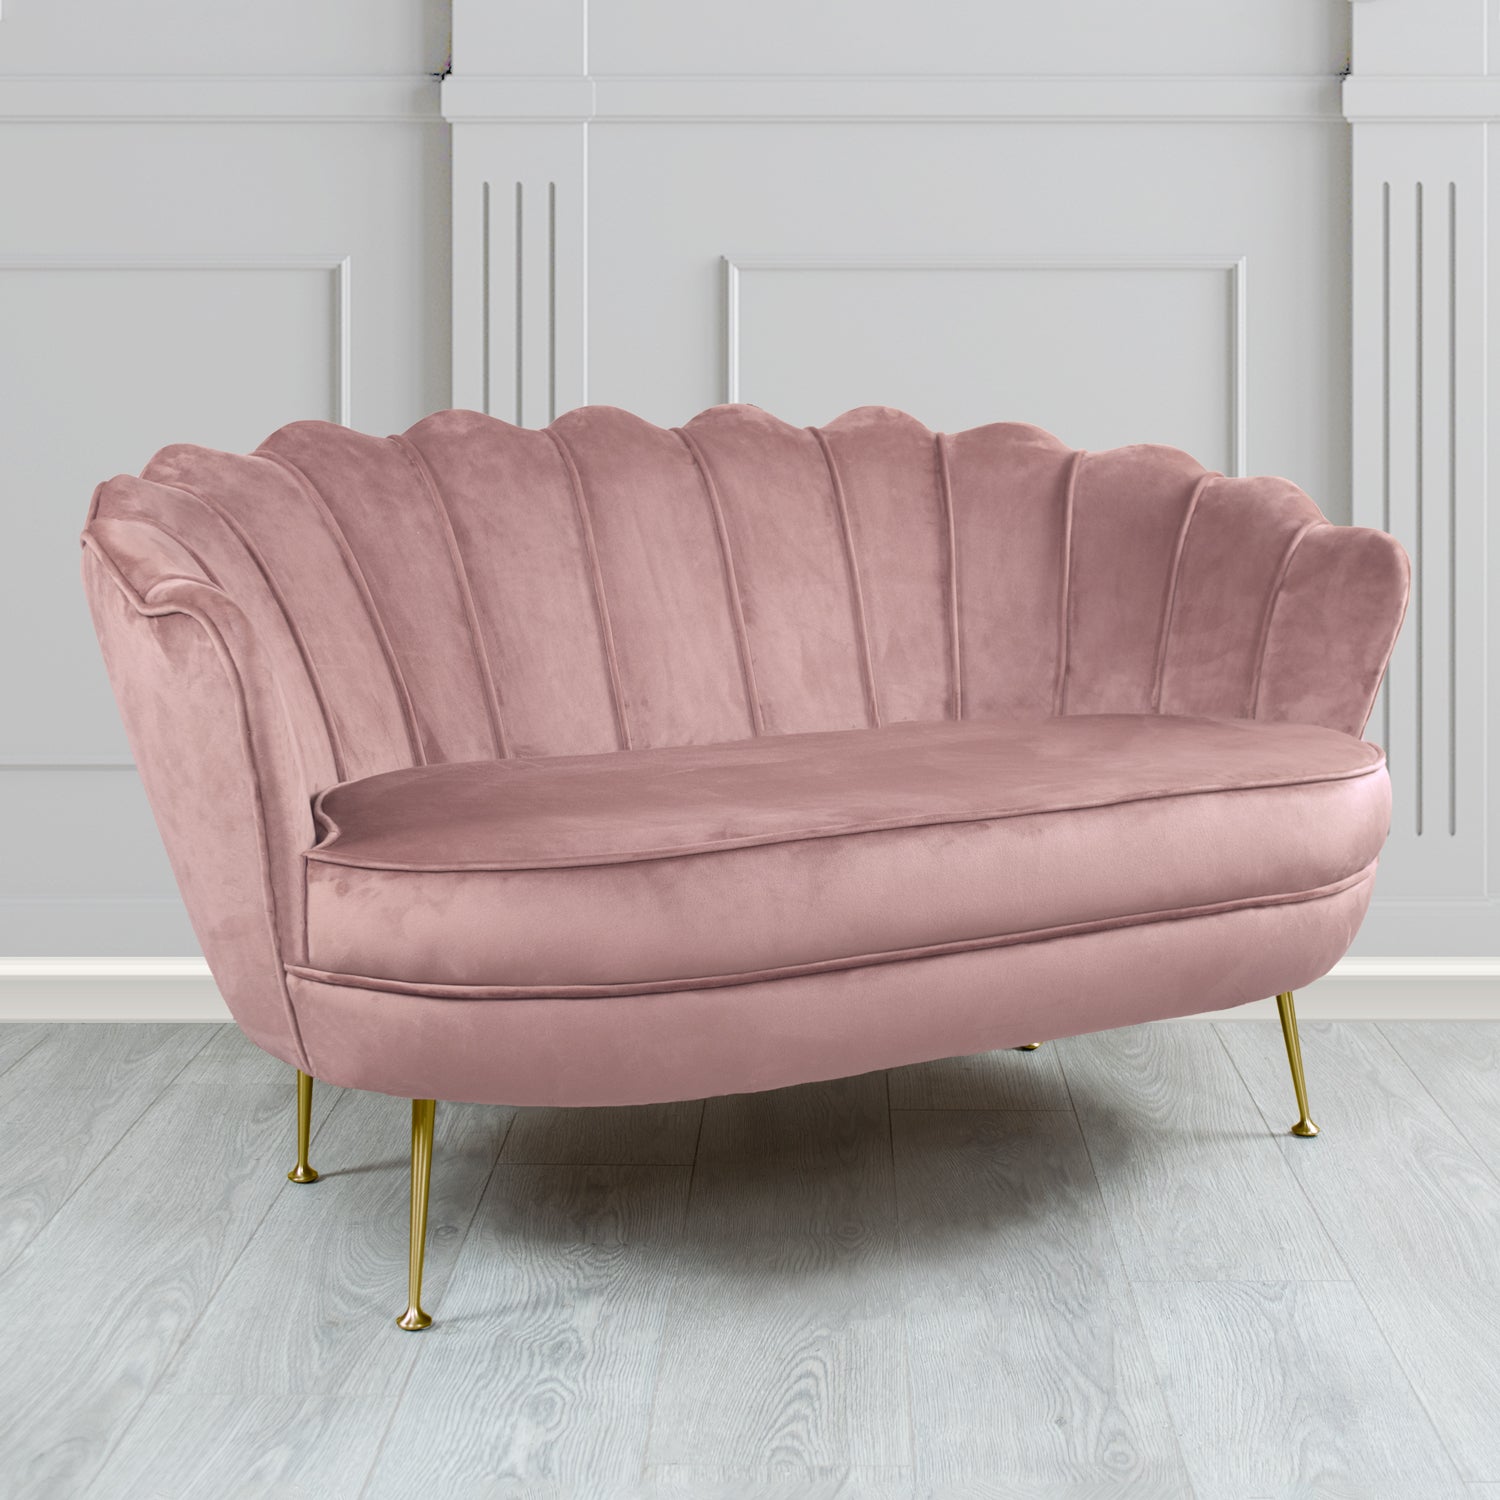 Olivia Monaco Heather Plain Velvet Fabric 2 Seater Shell Sofa - The Tub Chair Shop